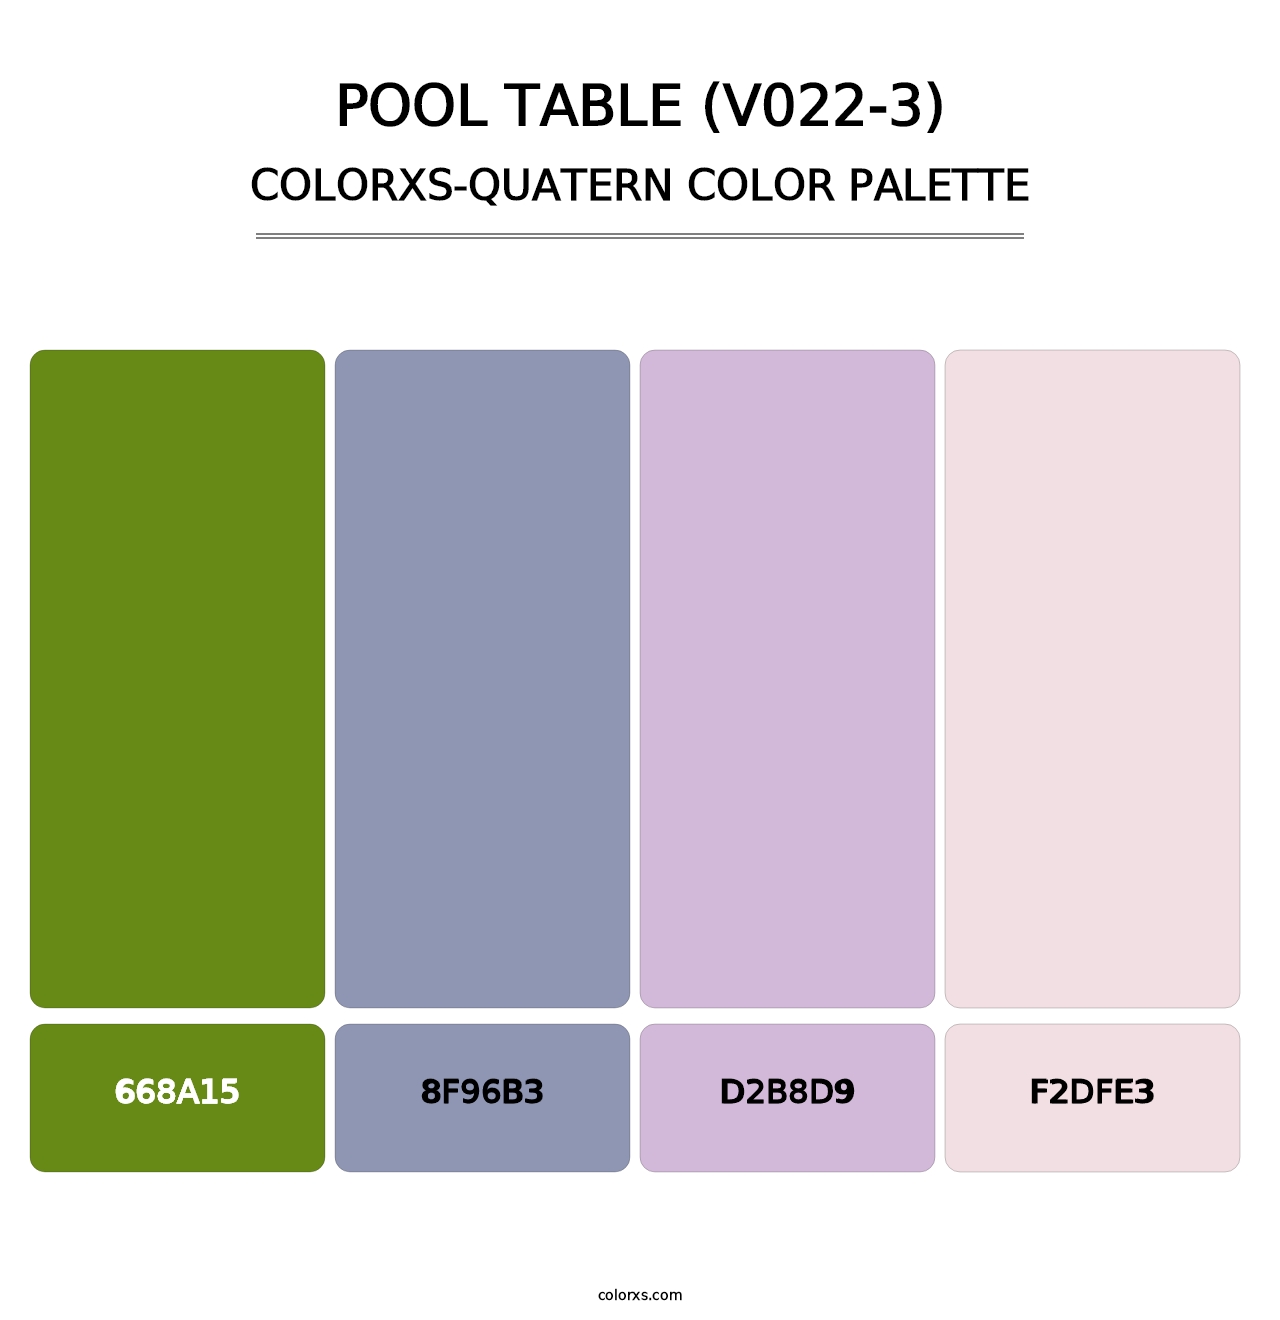 Pool Table (V022-3) - Colorxs Quatern Palette